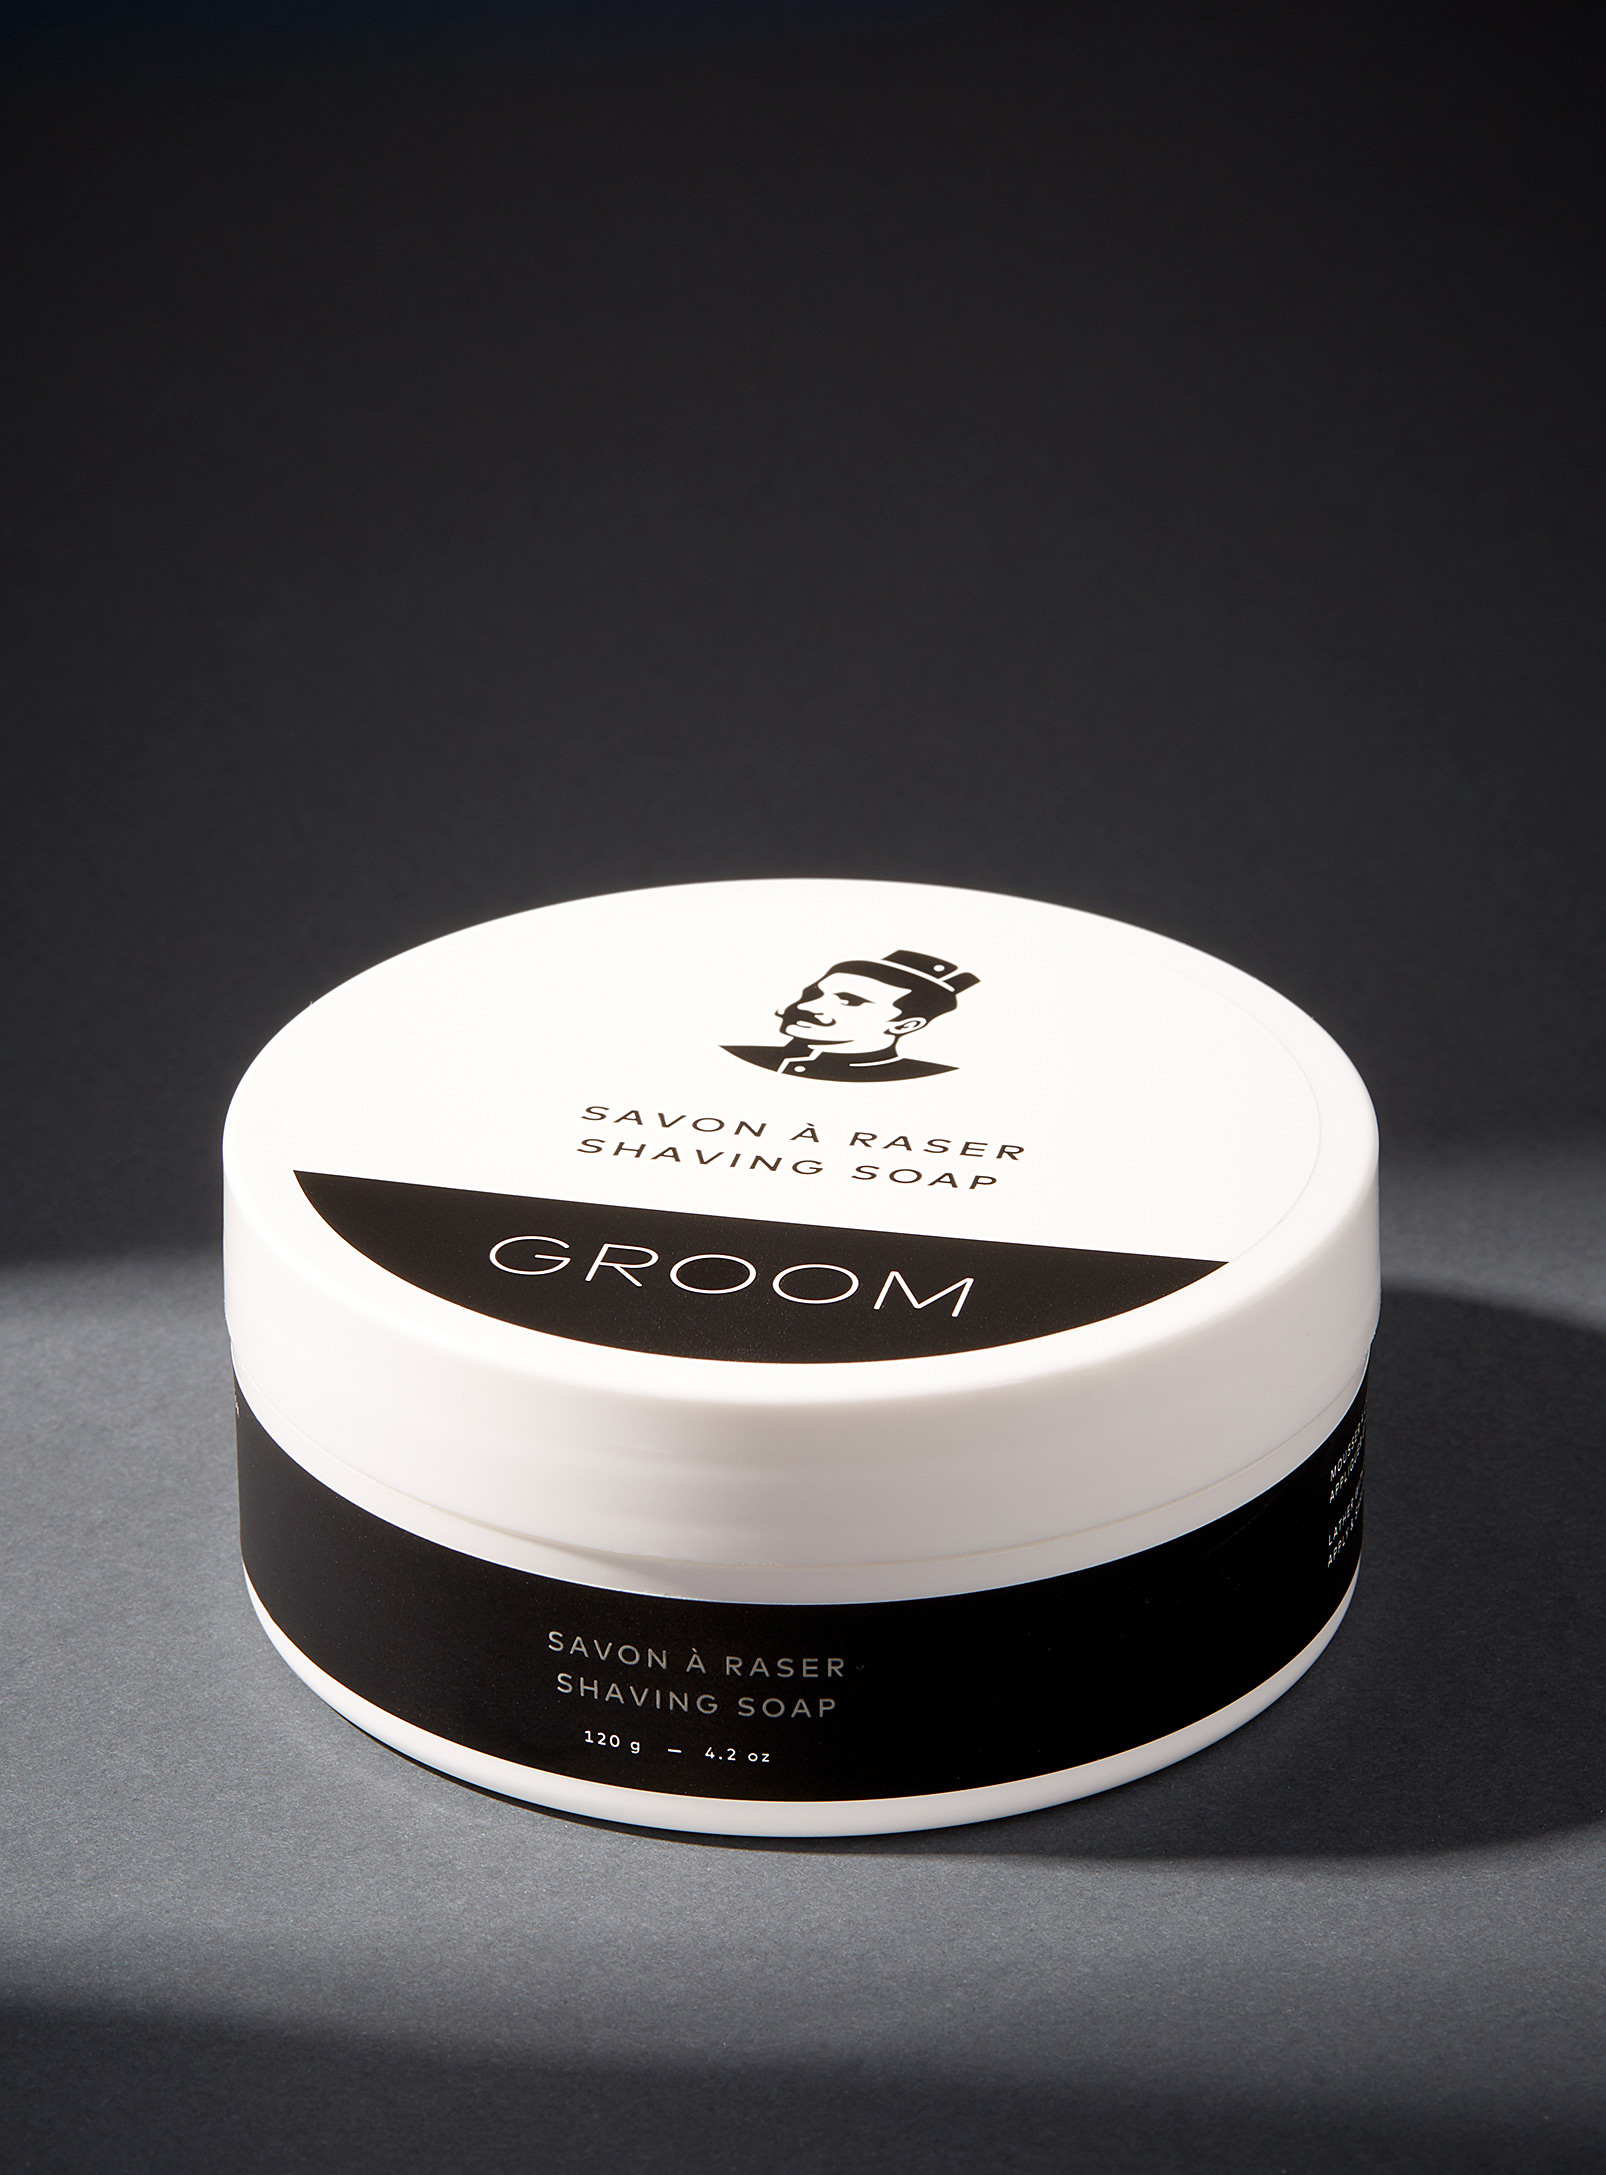 Industries Groom - Creamy shaving soap